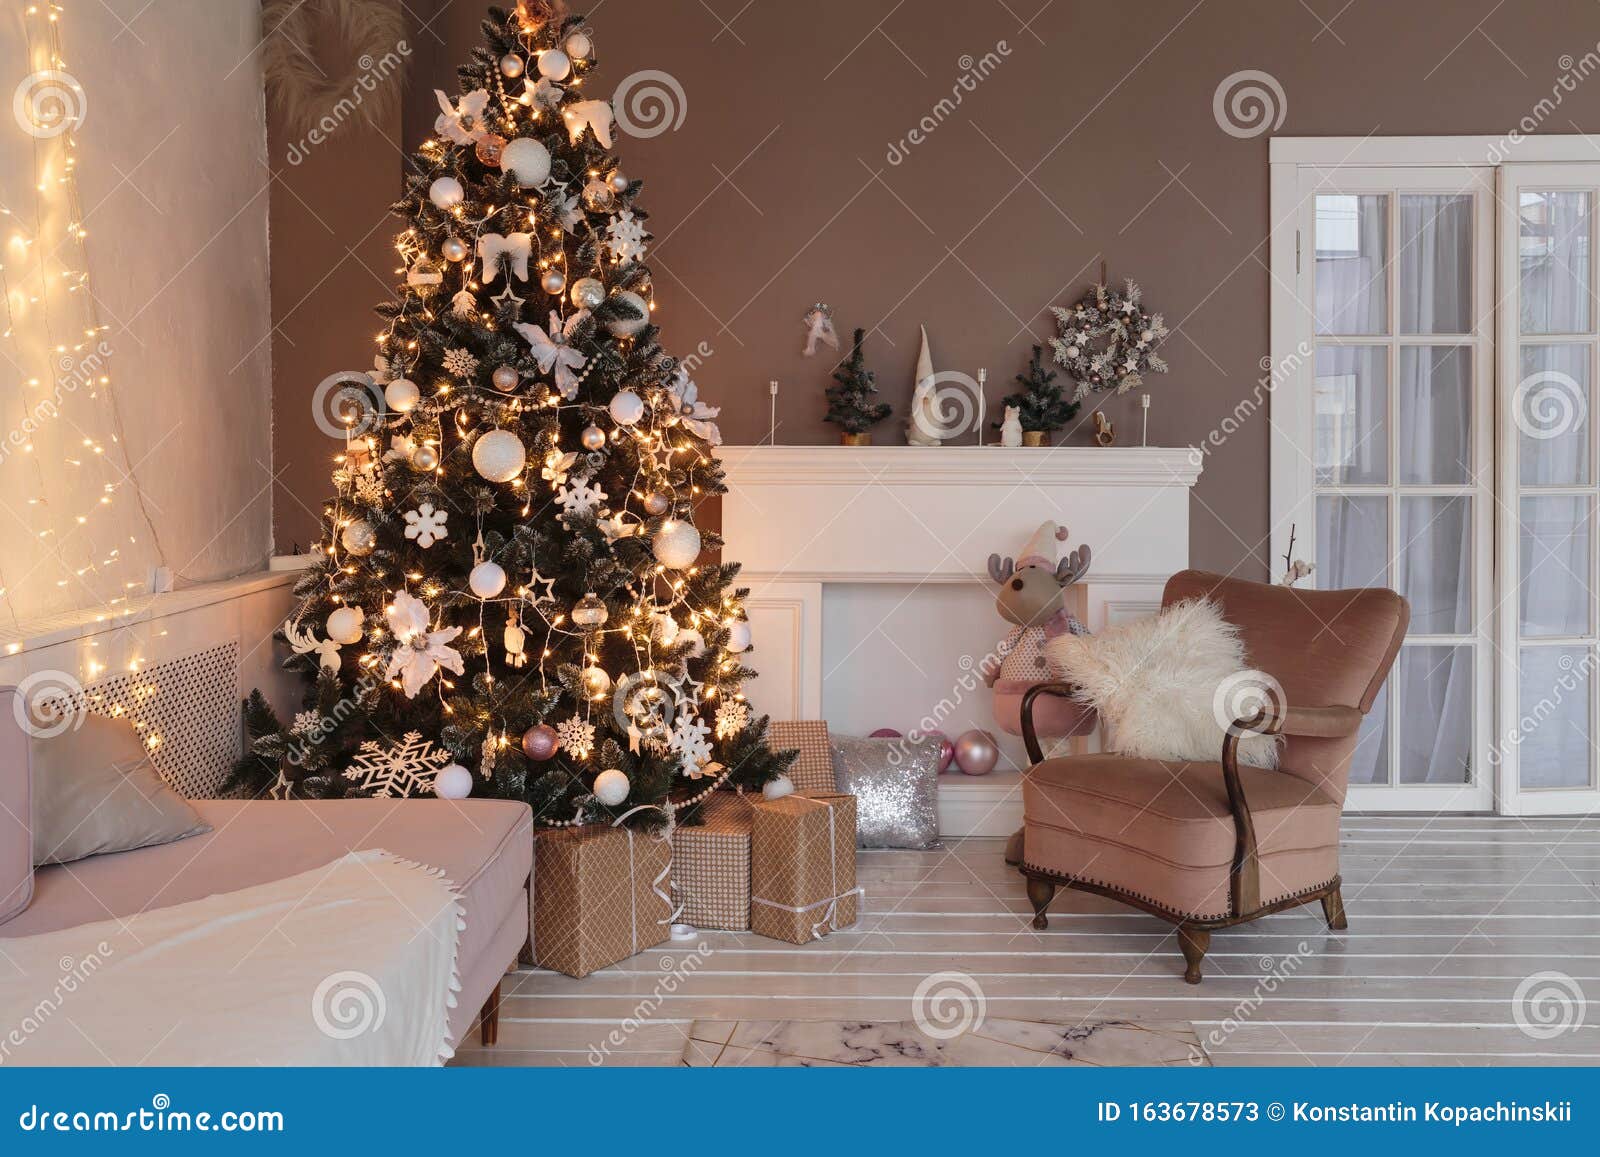 Winter Home Decor. Christmas Tree in Loft Interior Stock Image ...